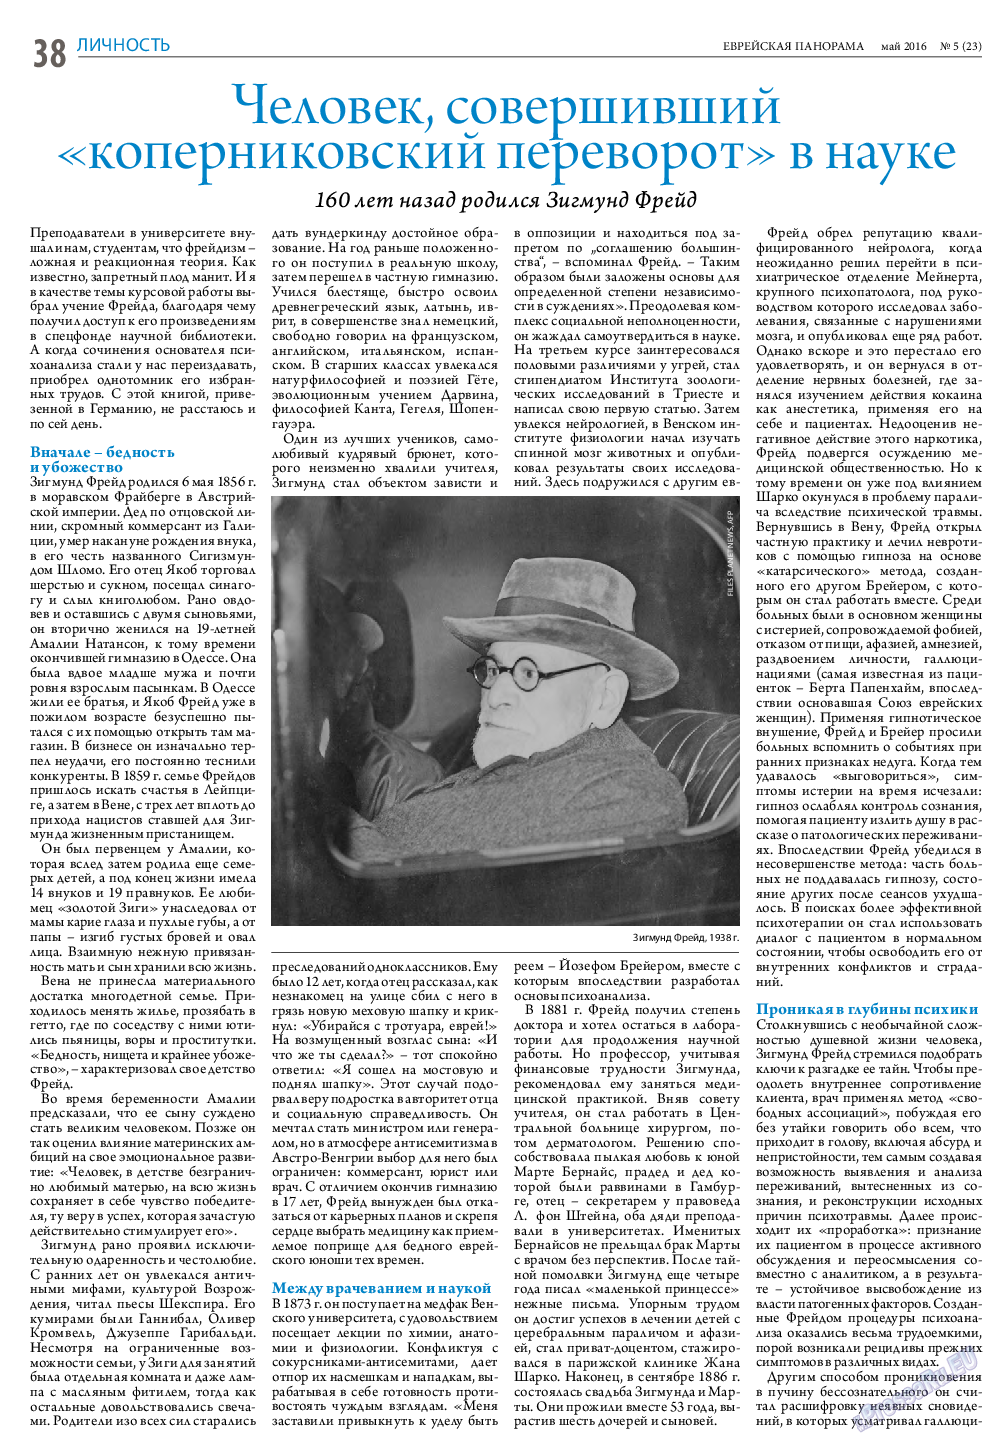 Еврейская панорама, газета. 2016 №5 стр.38